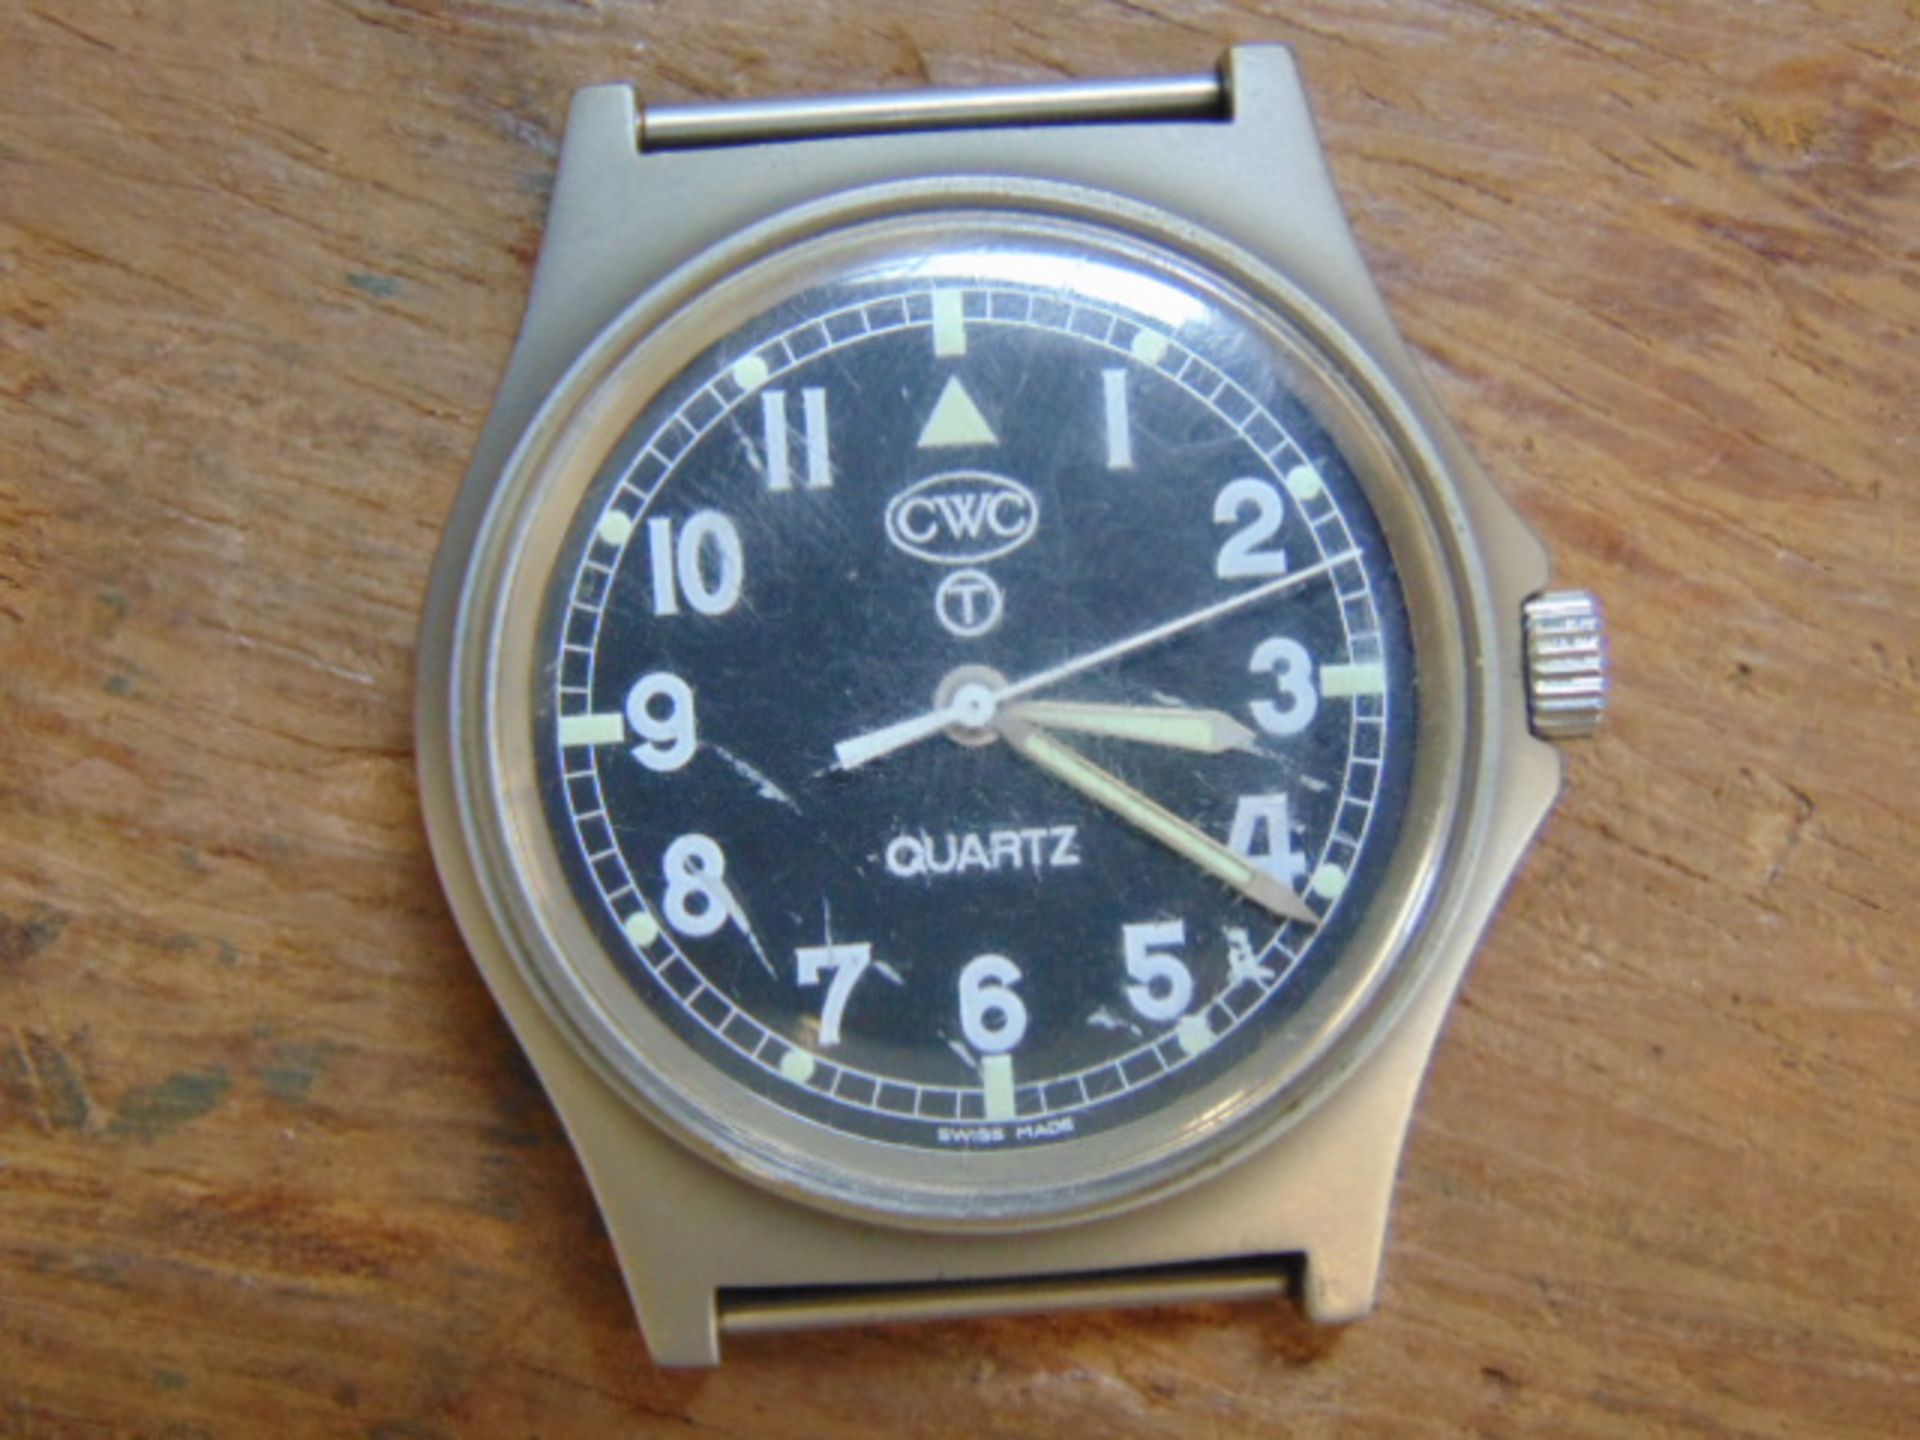 Genuine British Army, CWC Quartz Wrist Watch - Image 5 of 6